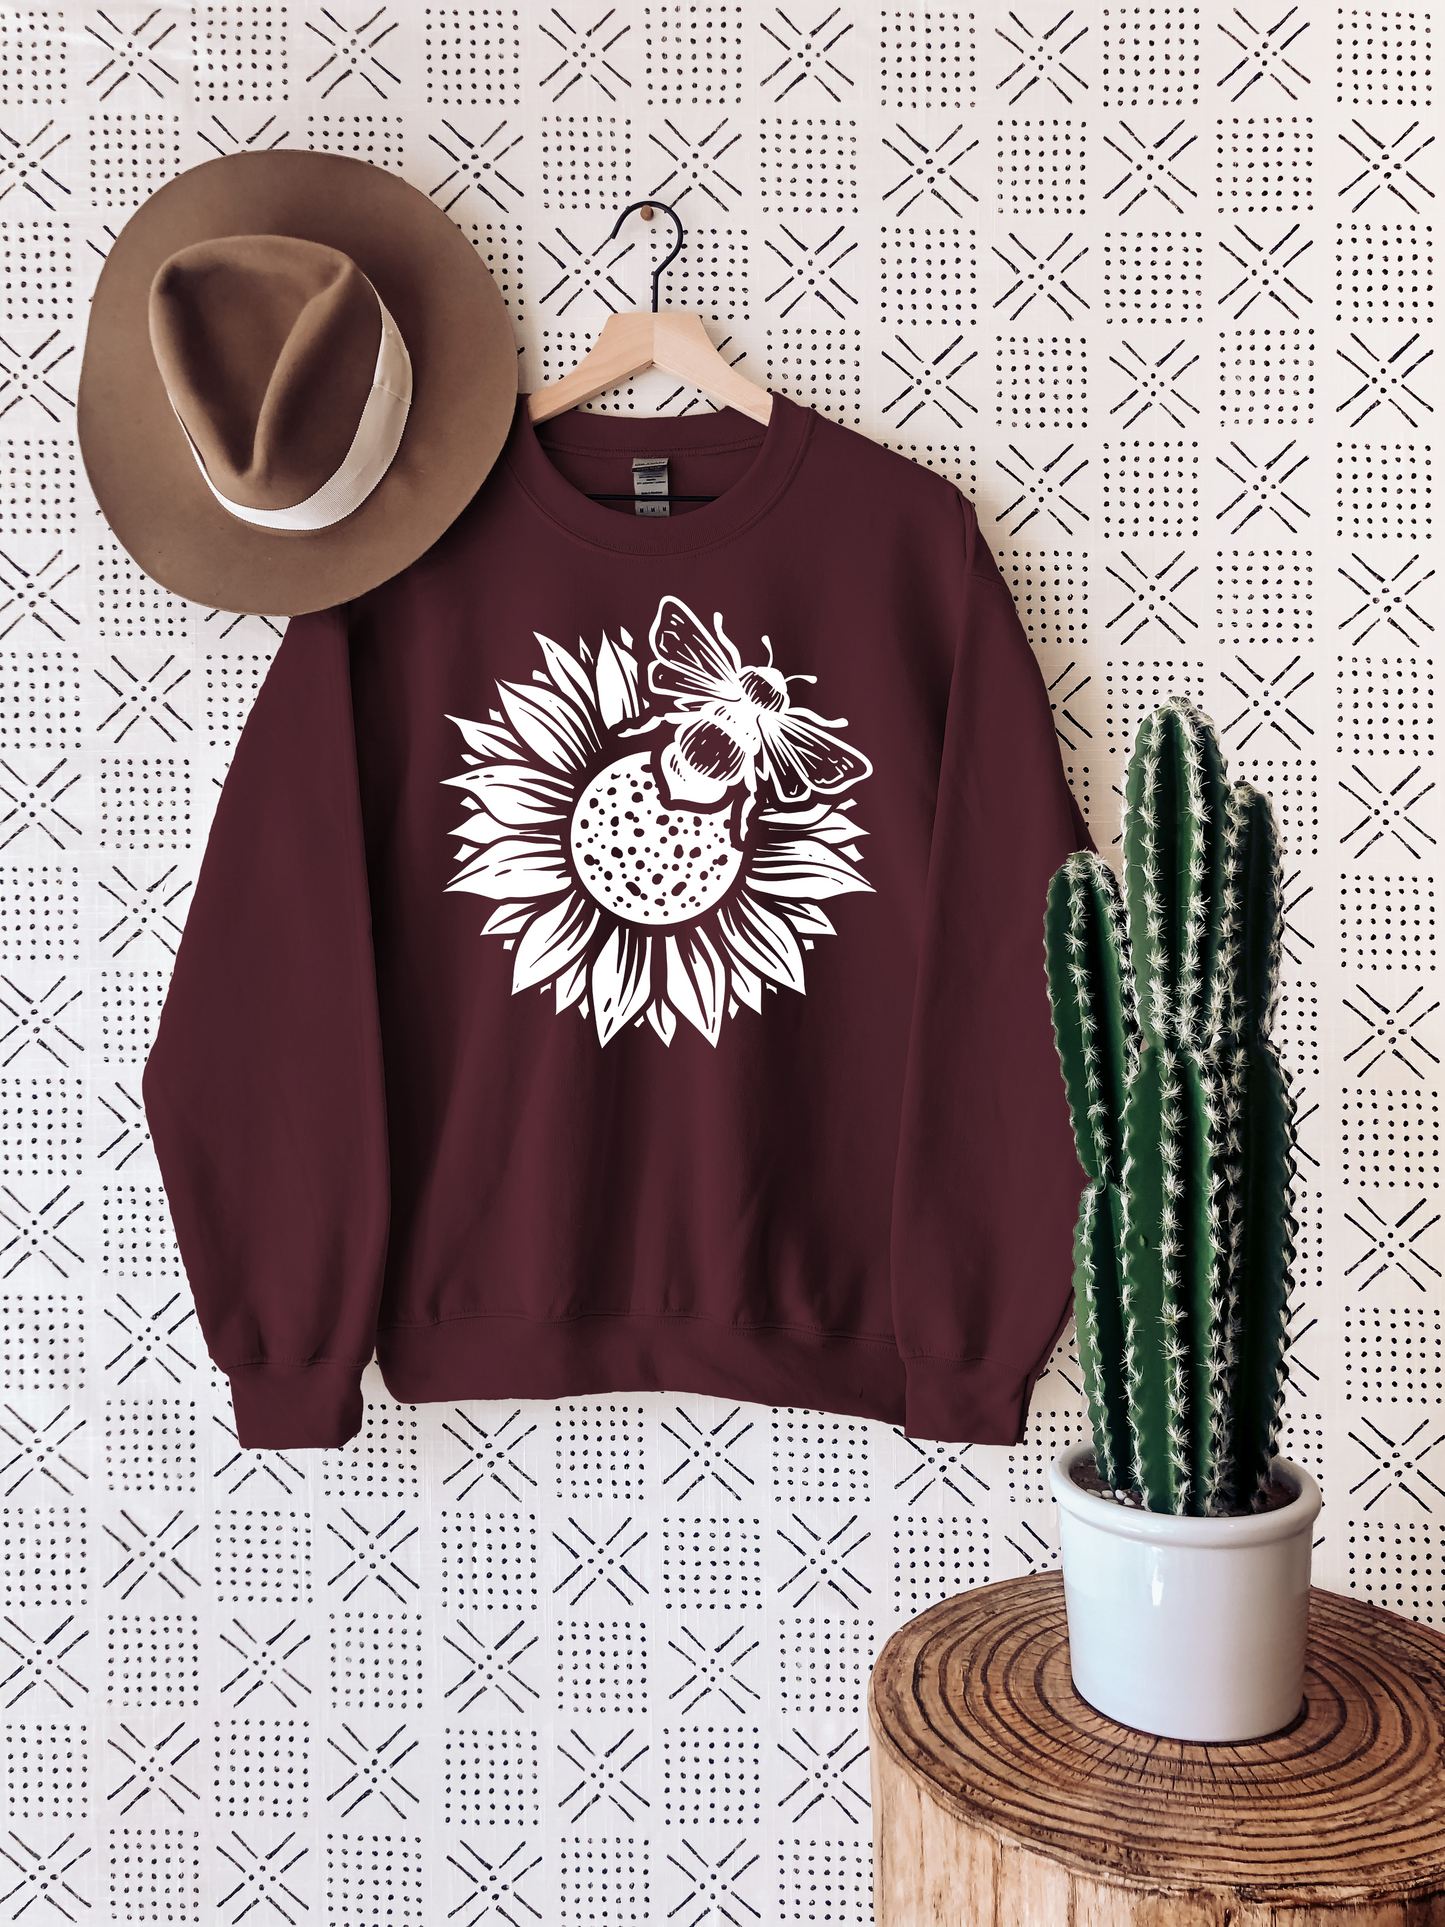 Bee & Sunflower Sweatshirt